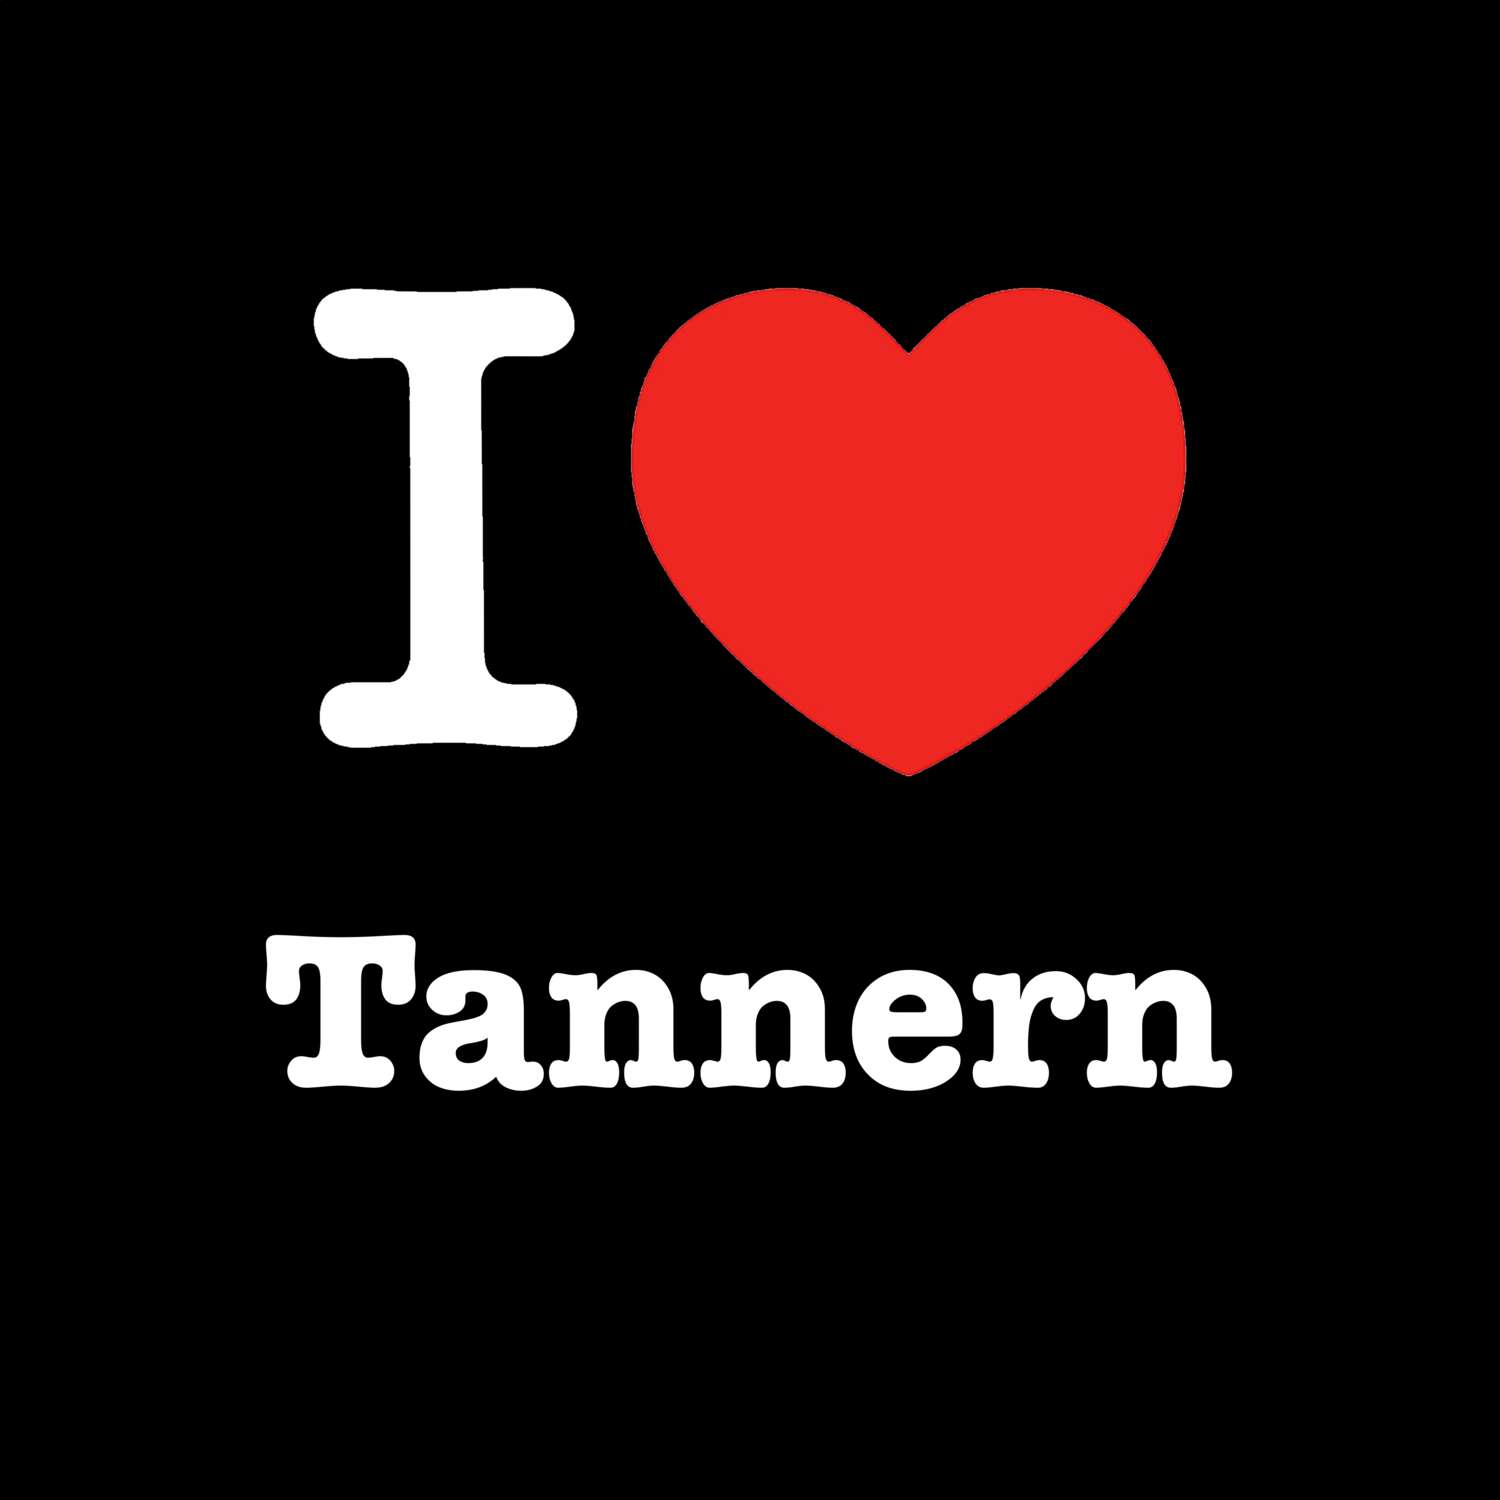 Tannern T-Shirt »I love«